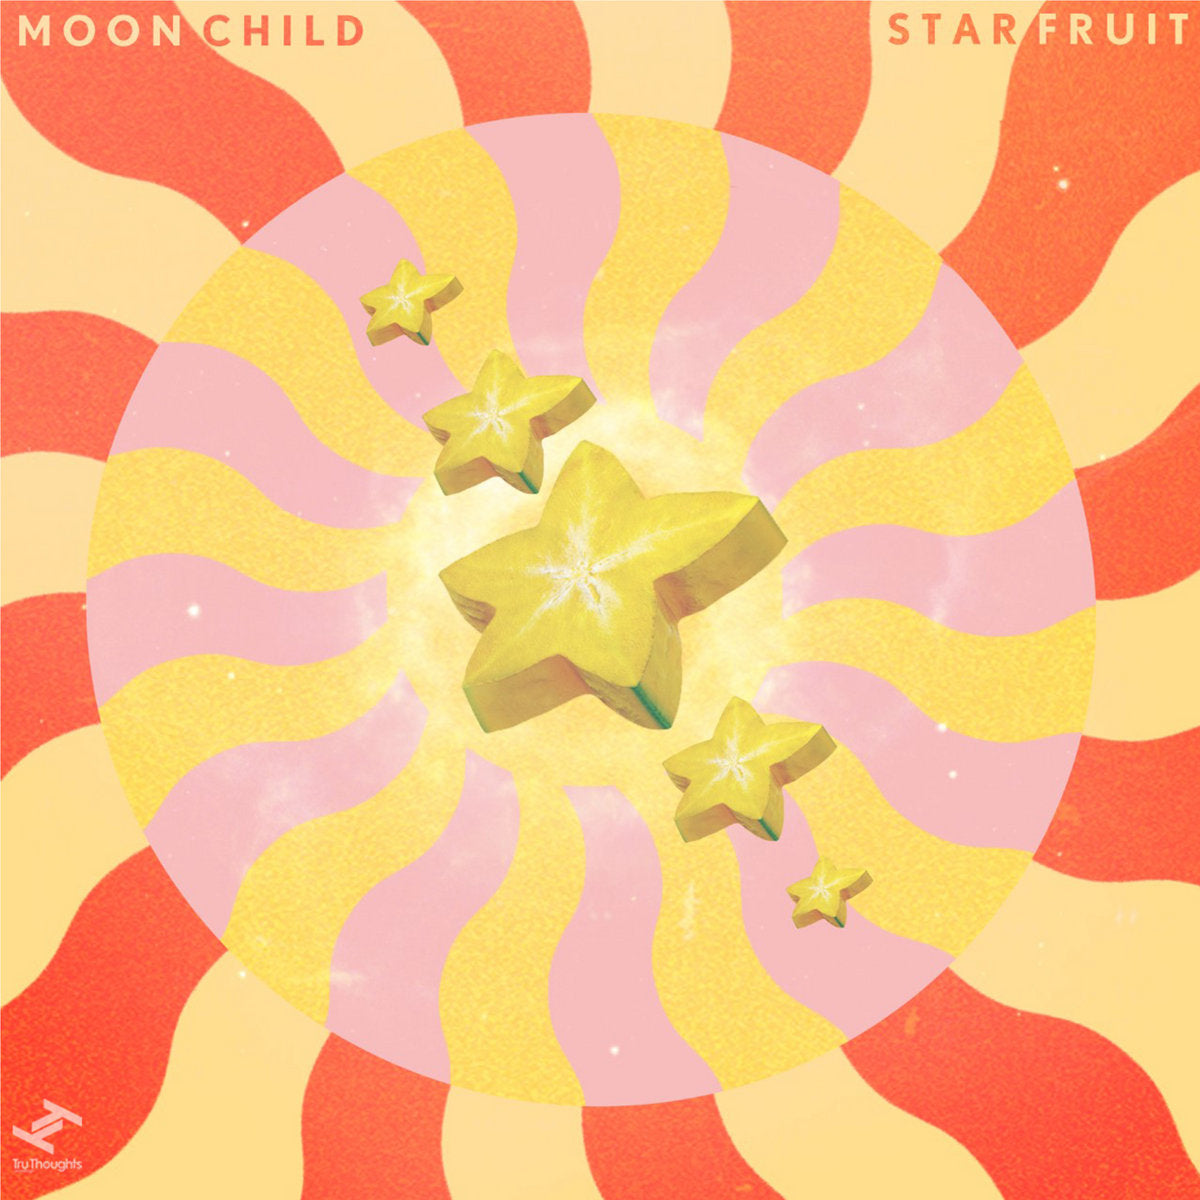 Starfruit (New 2LP)